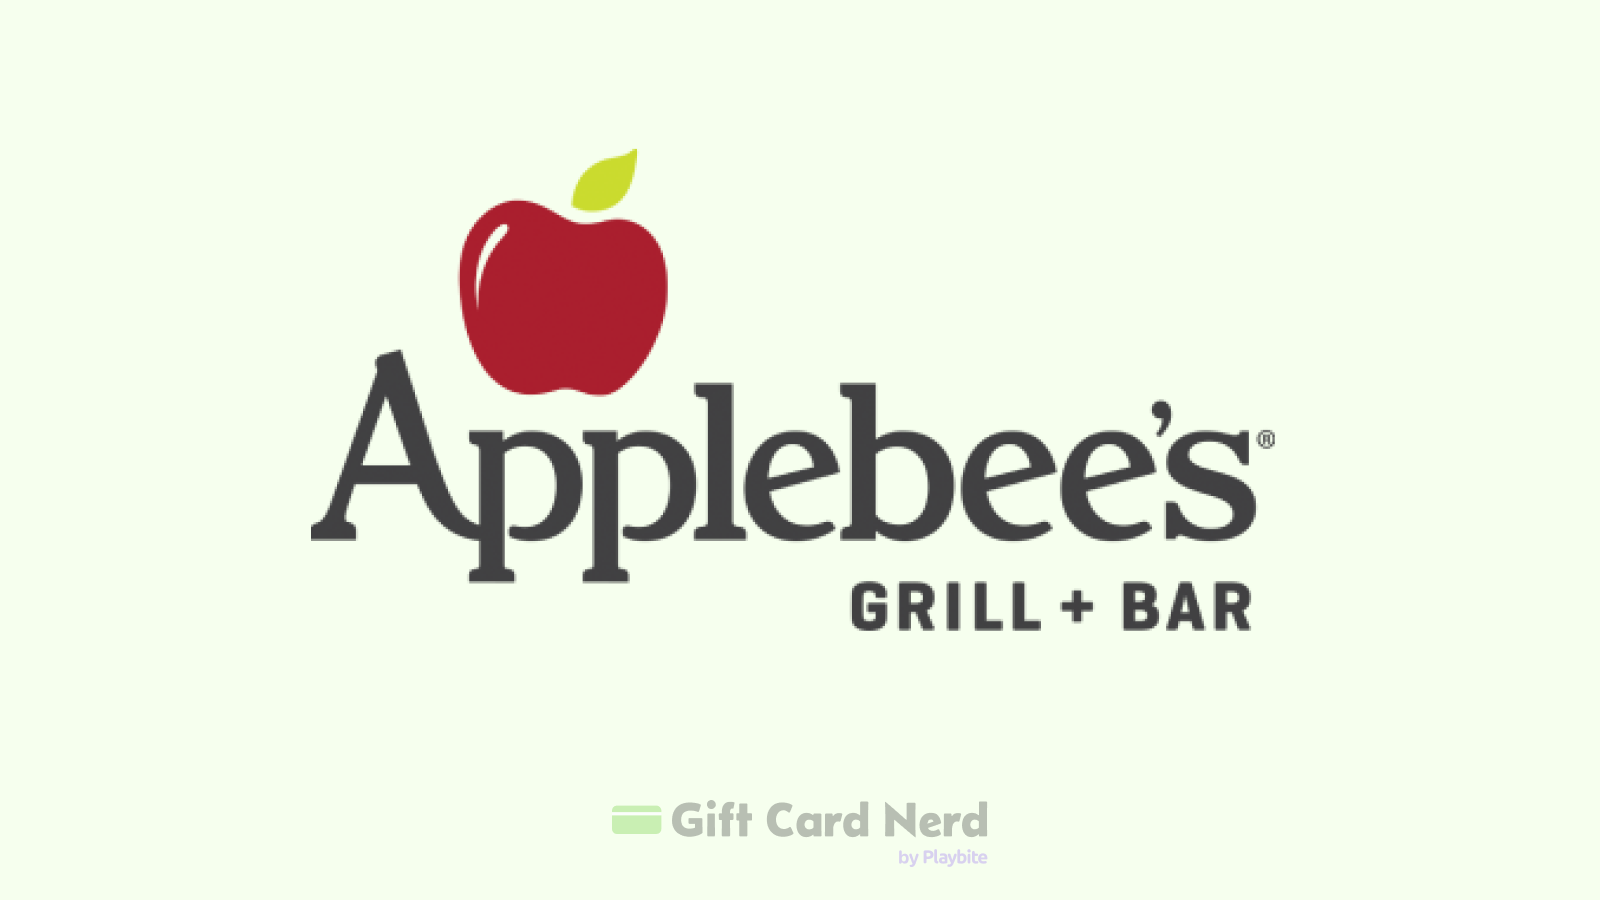 &#8220;Can I use an Applebee&#8217;s gift card on Grubhub?&#8221;